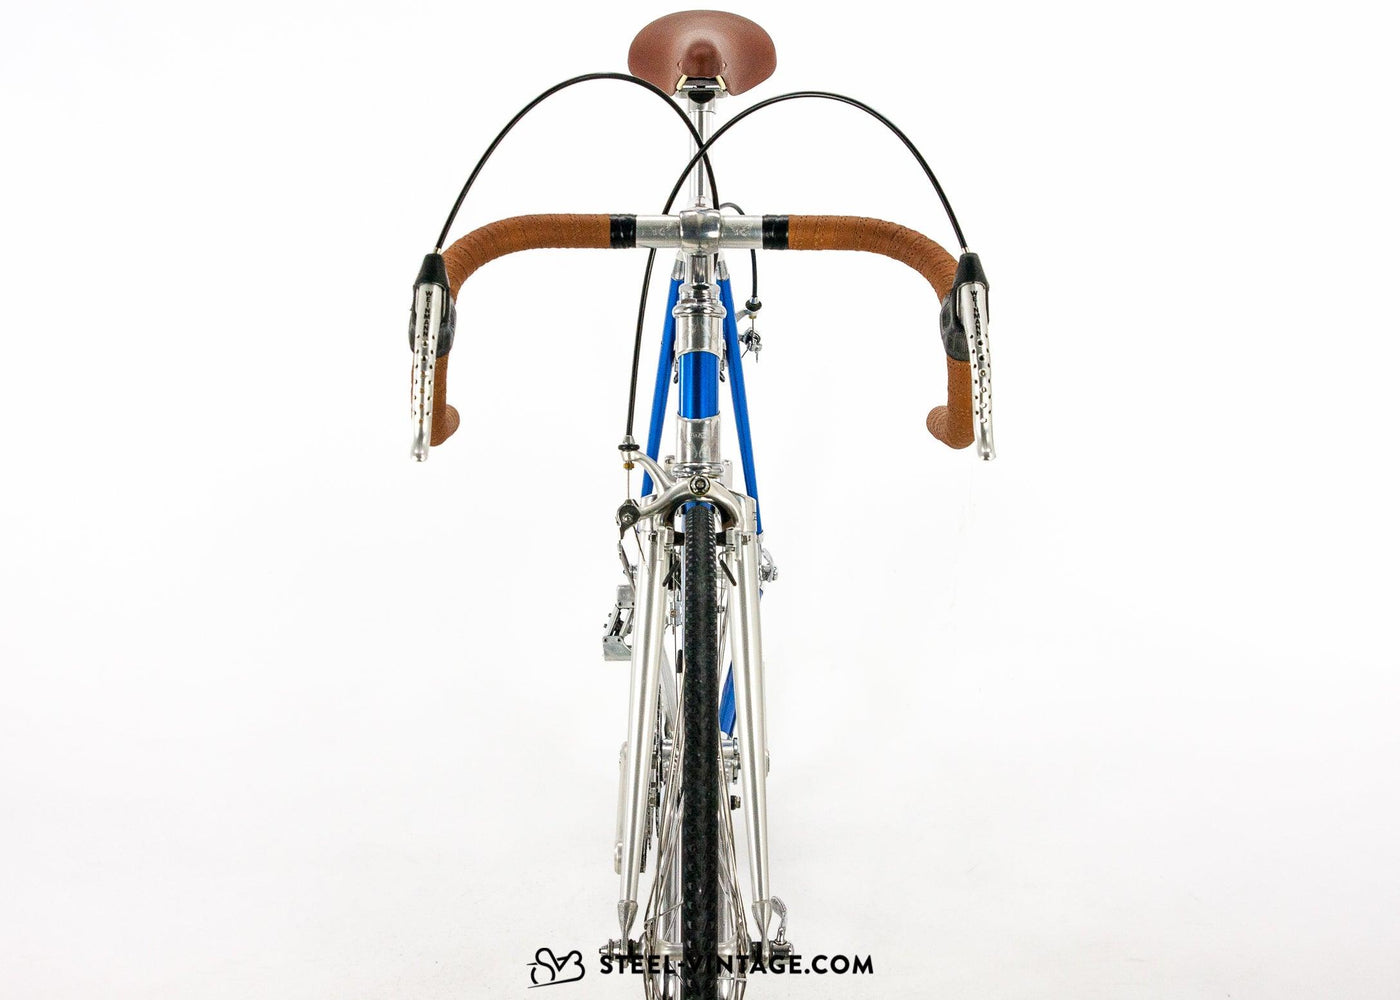 Gamba Classic Climbing Road Bike 1980s - Steel Vintage Bikes